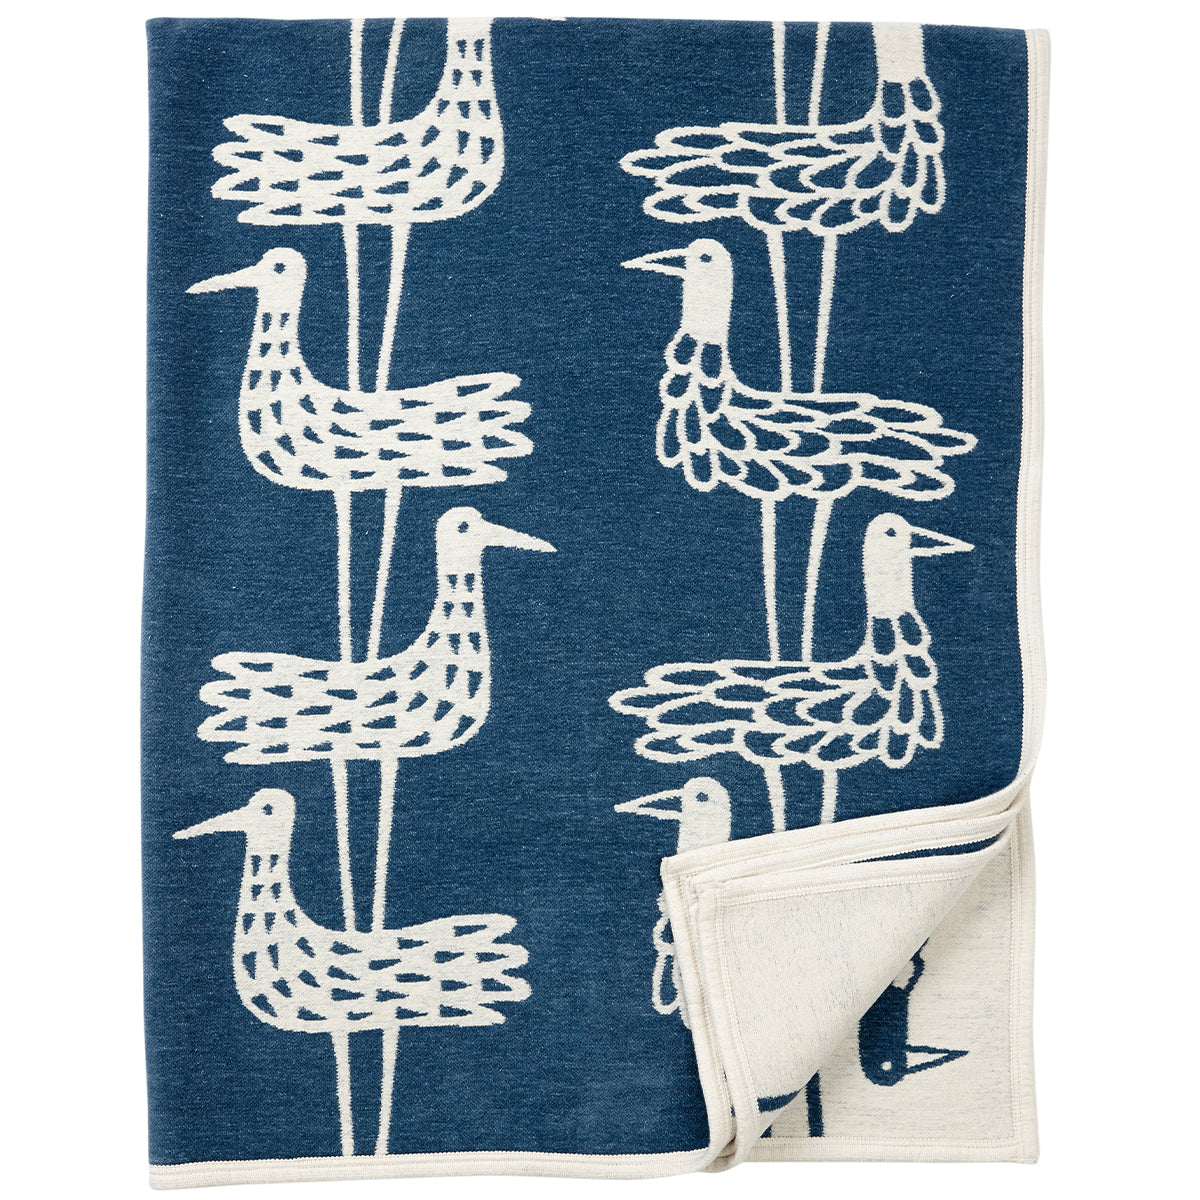 Shorebird Blue 140x180cm Cotton Chenille Blanket